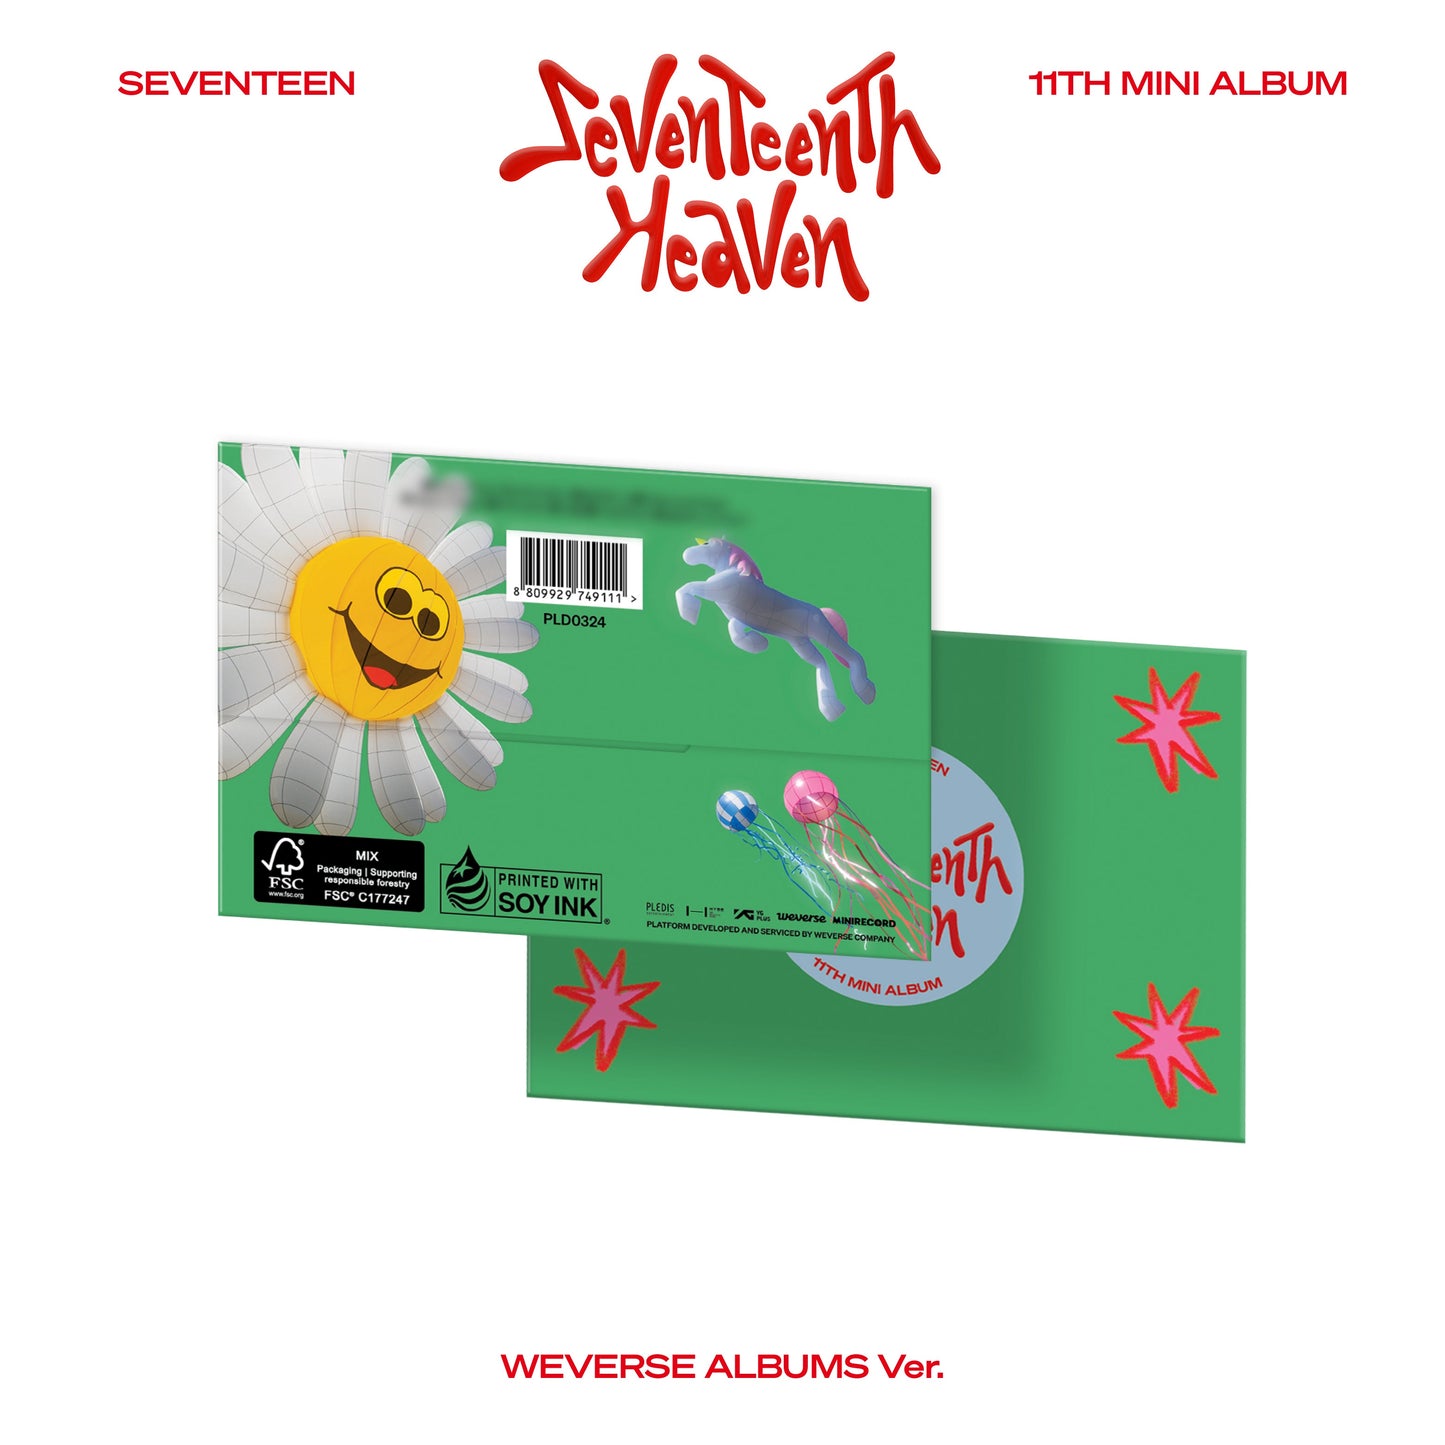 SEVENTEEN 11TH MINI ALBUM 'SEVENTEENTH HEAVEN' (WEVERSE) COVER